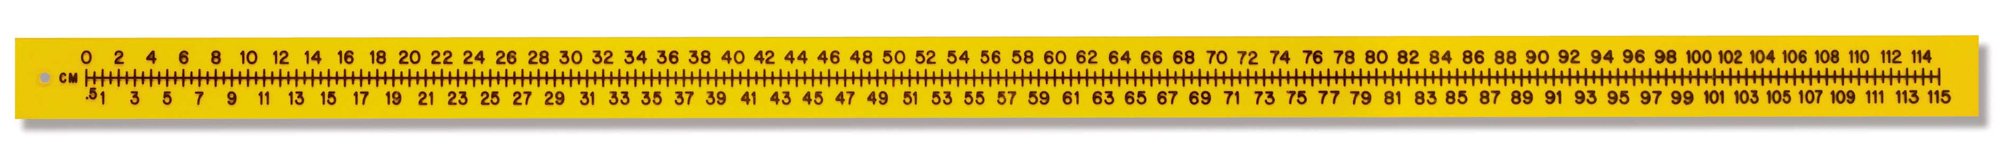 Flexible Radiopaque Extremity Ruler - 115cm L x 1/16